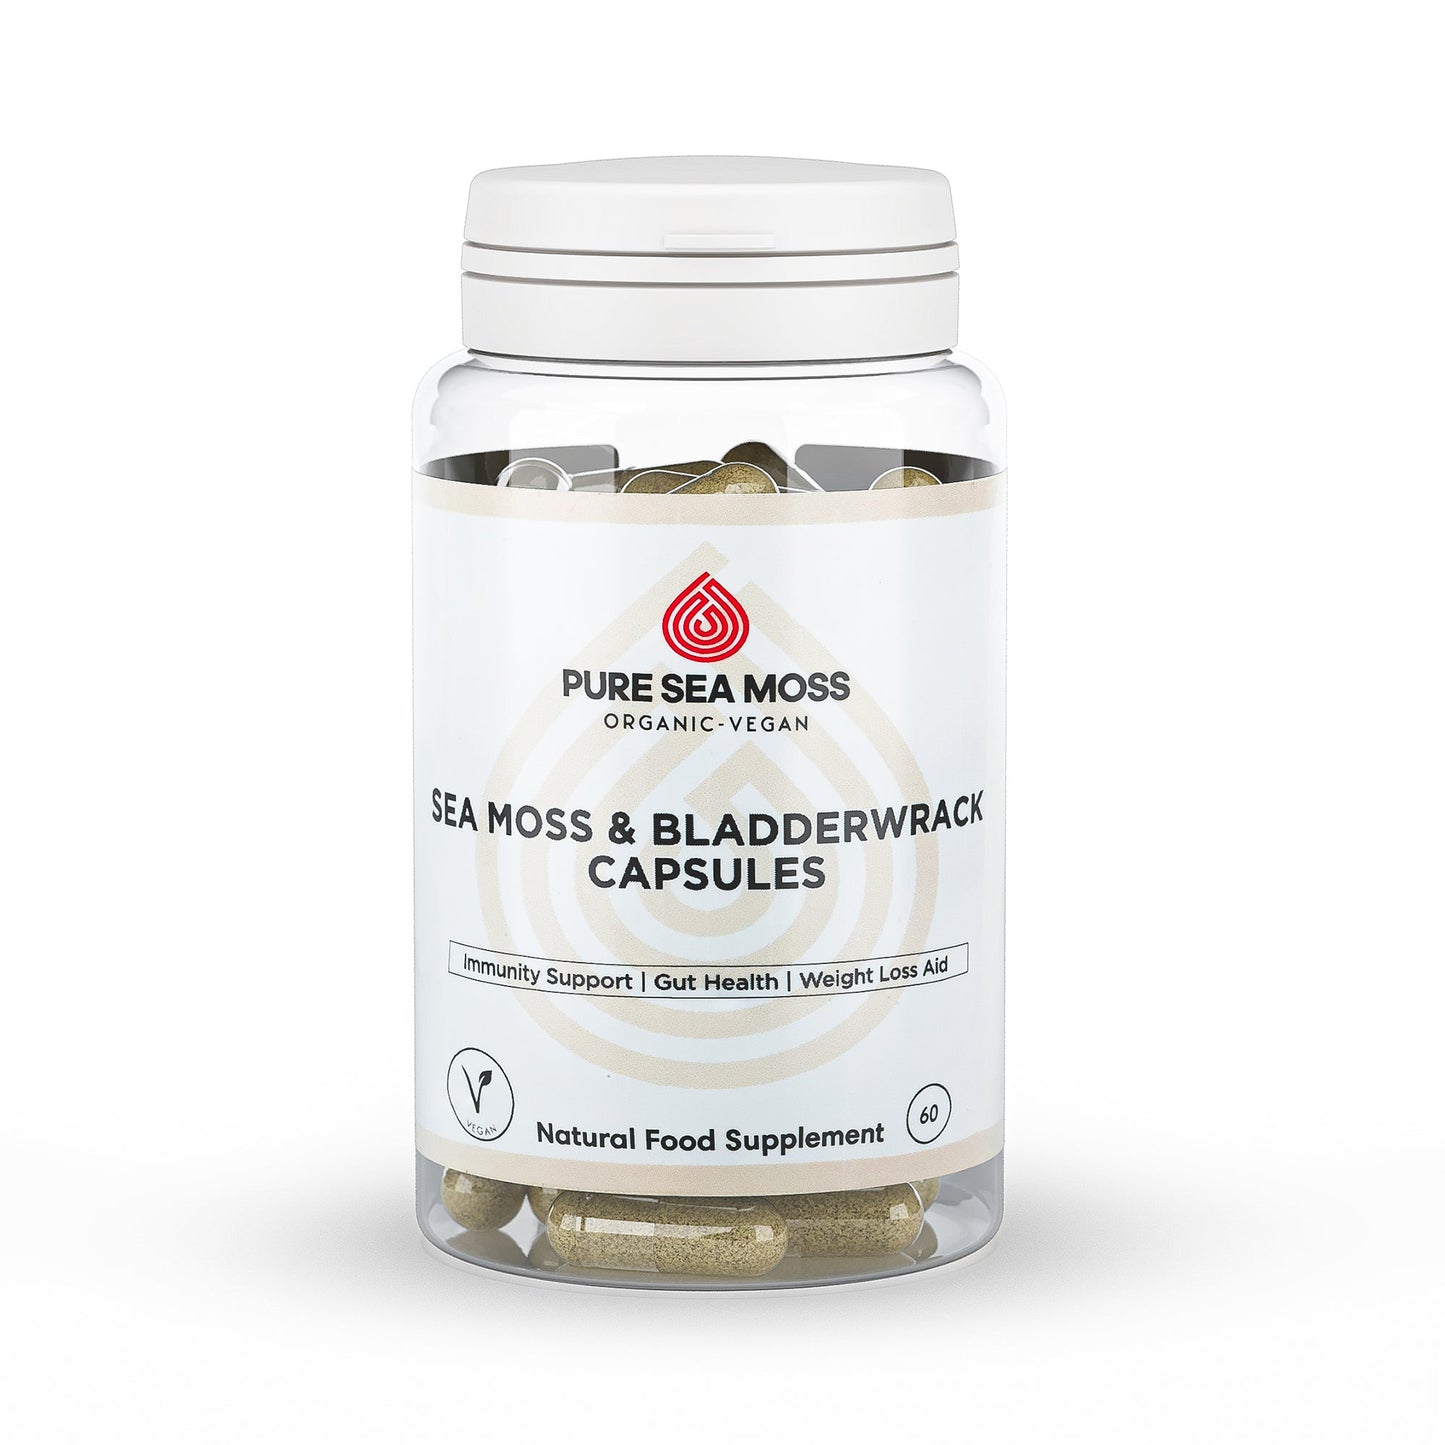 sea moss and bladderwrack capsules, seamoss uk